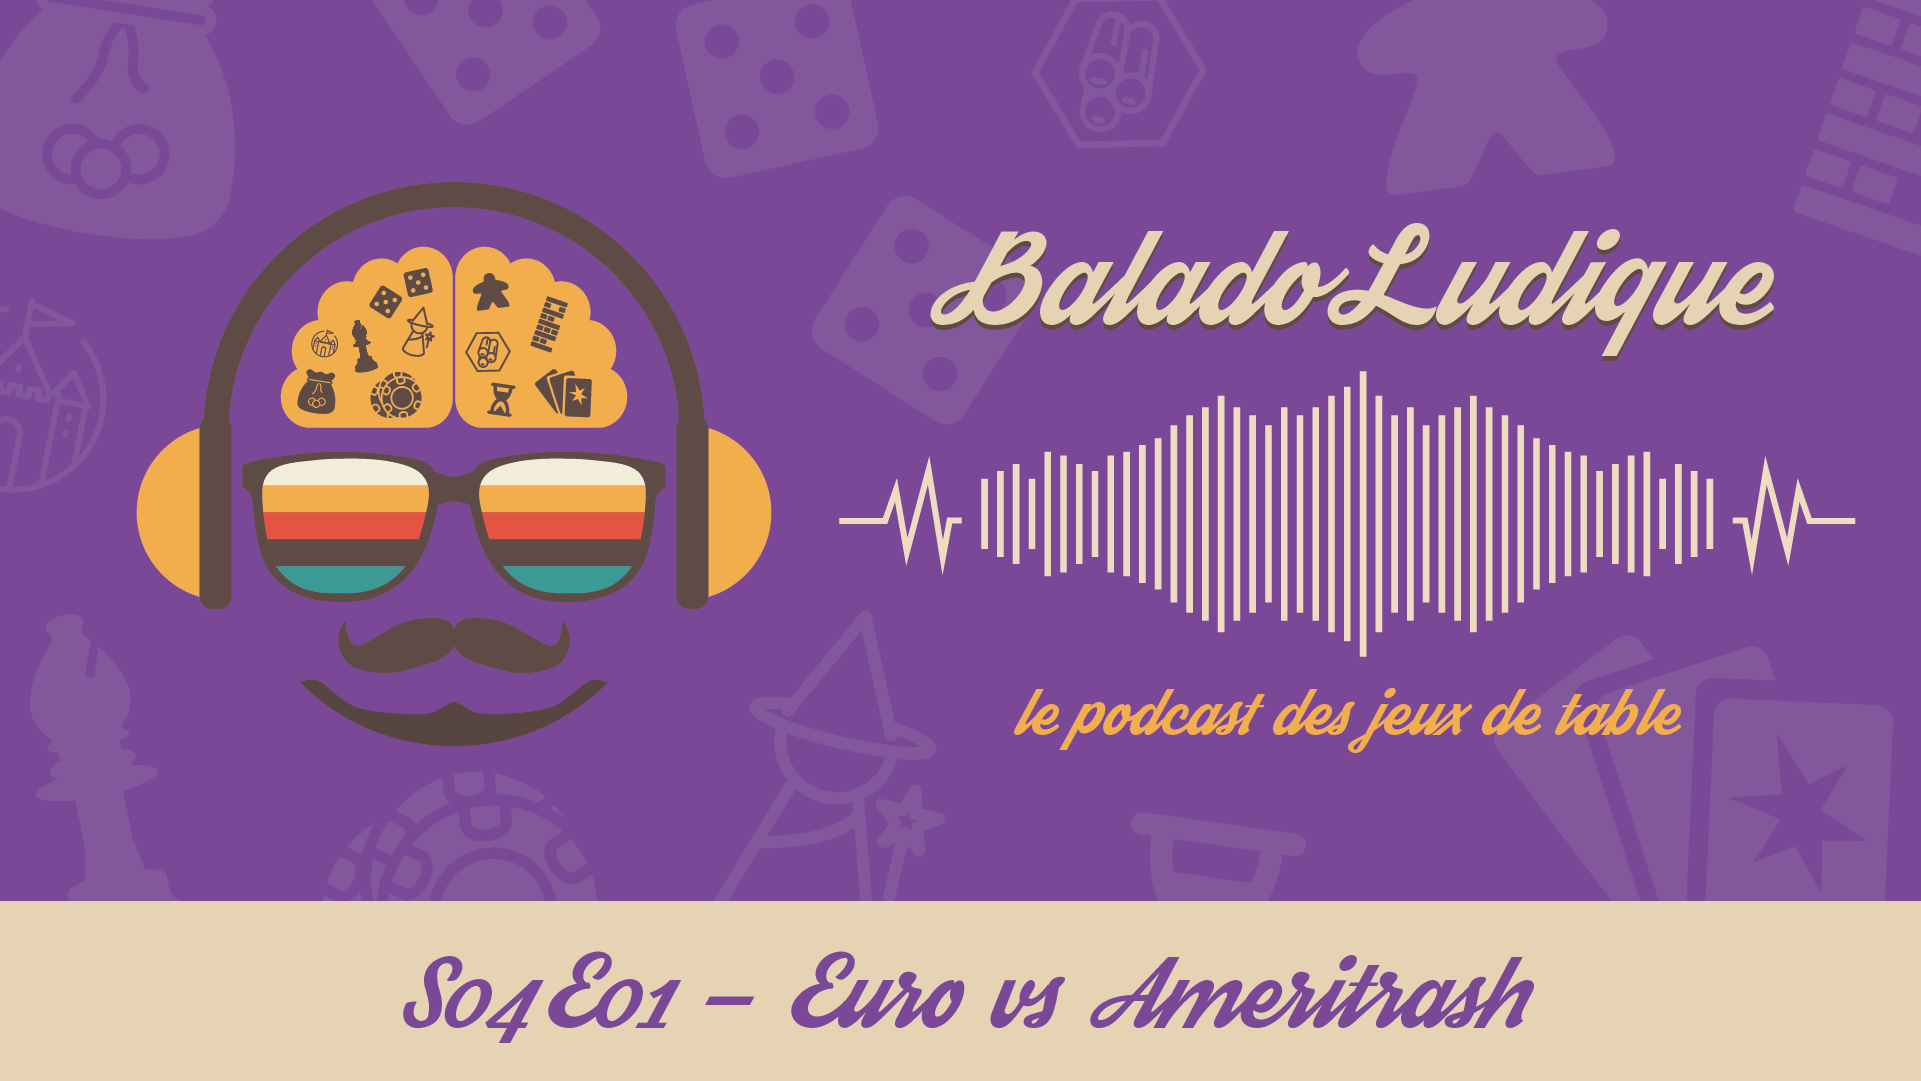 Euro vs Ameritrash - BaladoLudique - s04-e01